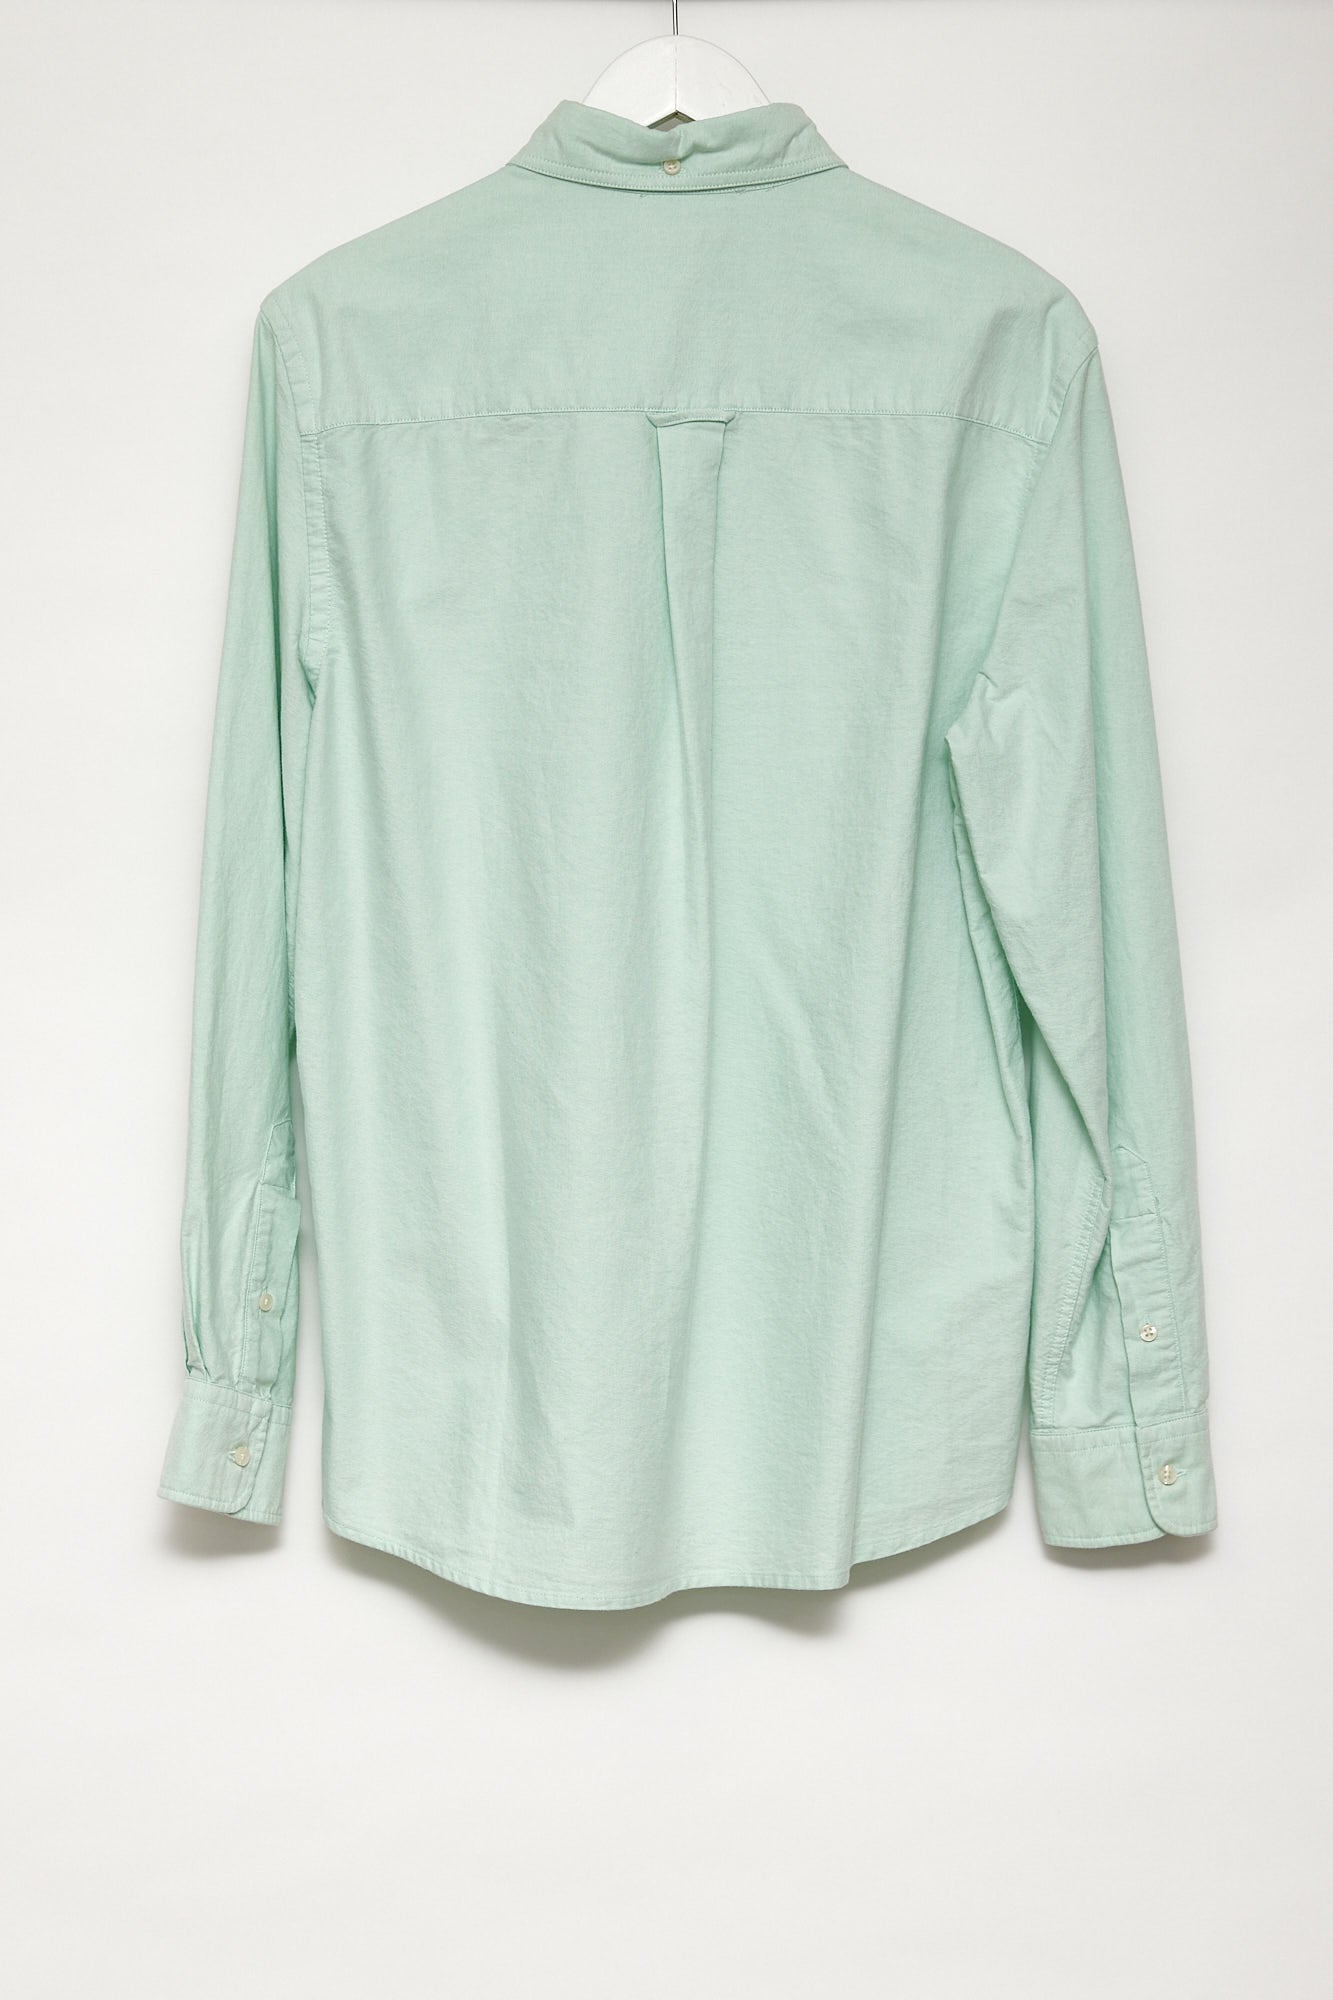 Mens Zara Light green Oxford shirt size Large